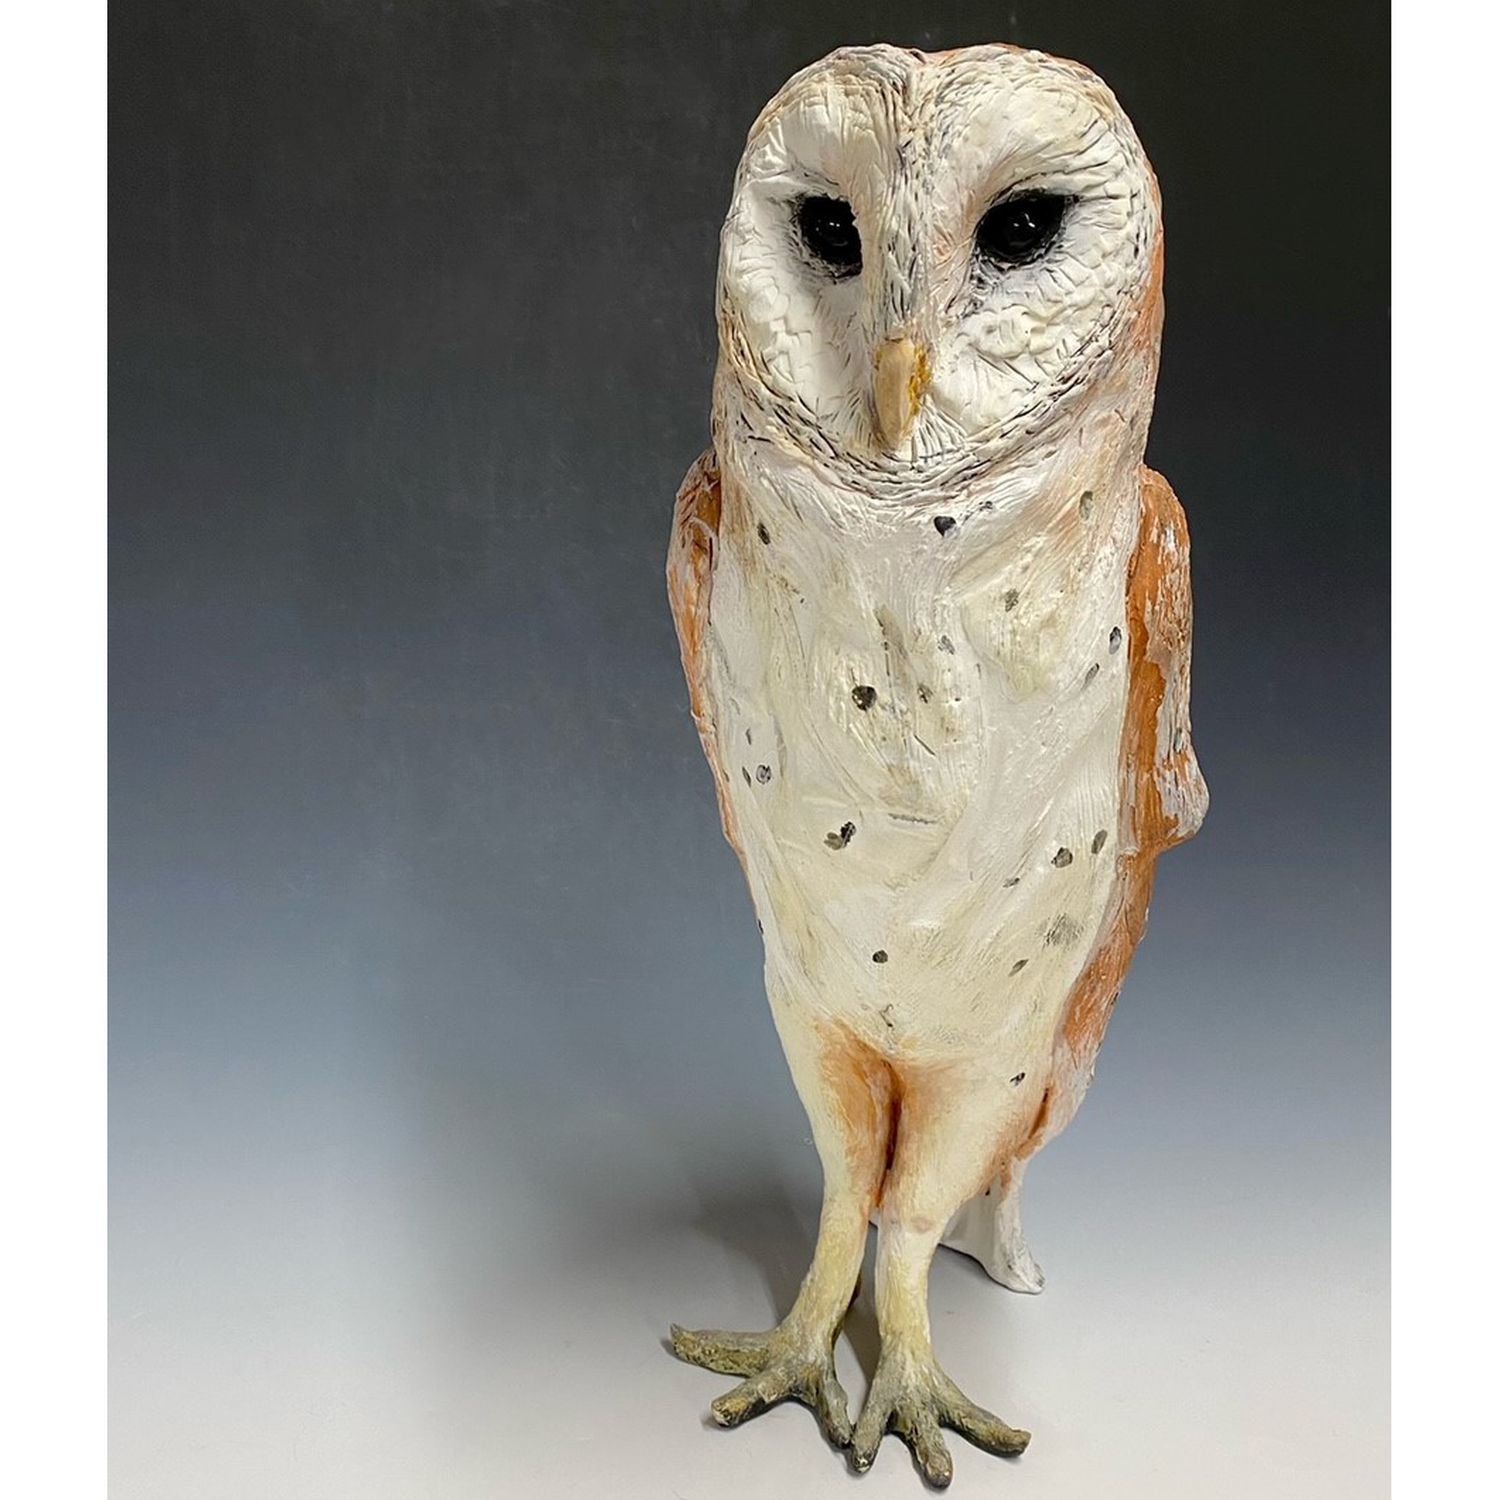 Mary Philpott: Barn Owl Product Image 1 of 2